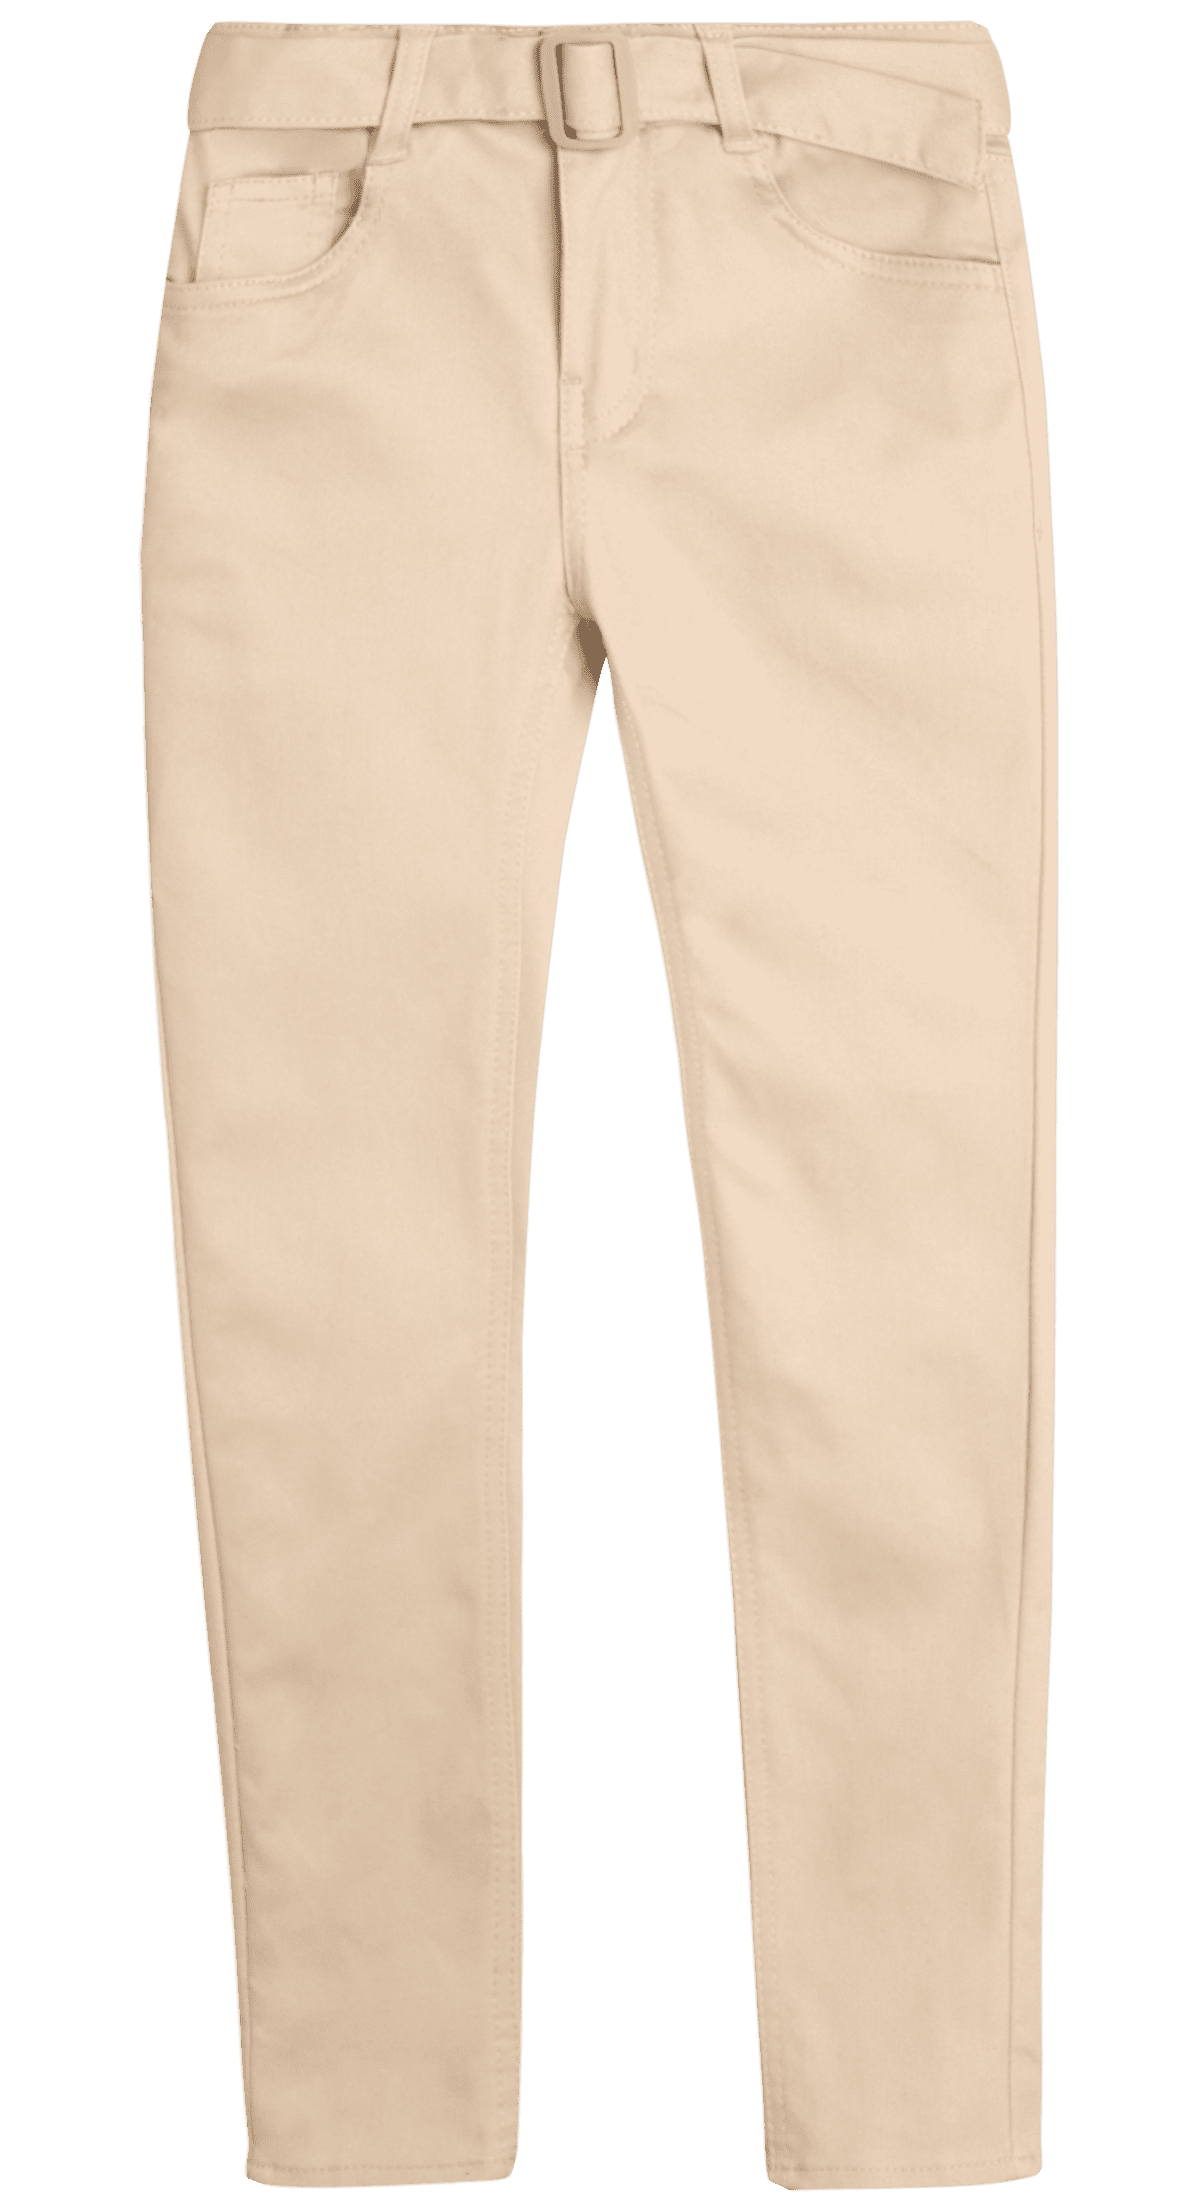 Beverly Hills Polo Club Girls' School Uniform Pants - Comfort Stretch ...